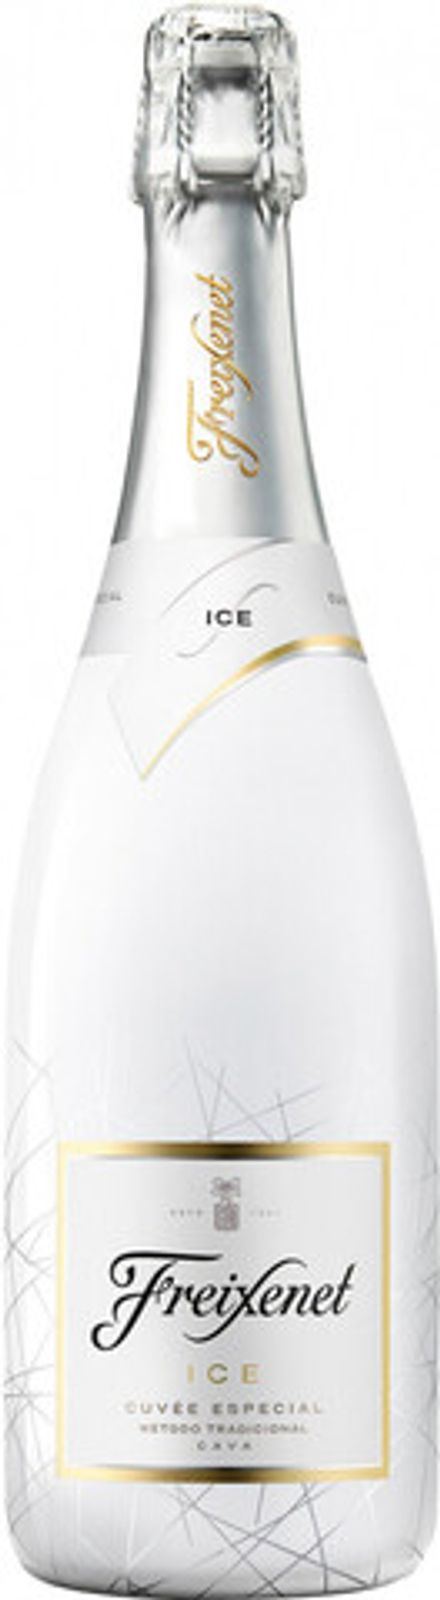 Игристое вино Freixenet Ice Cava, 0,75 л.